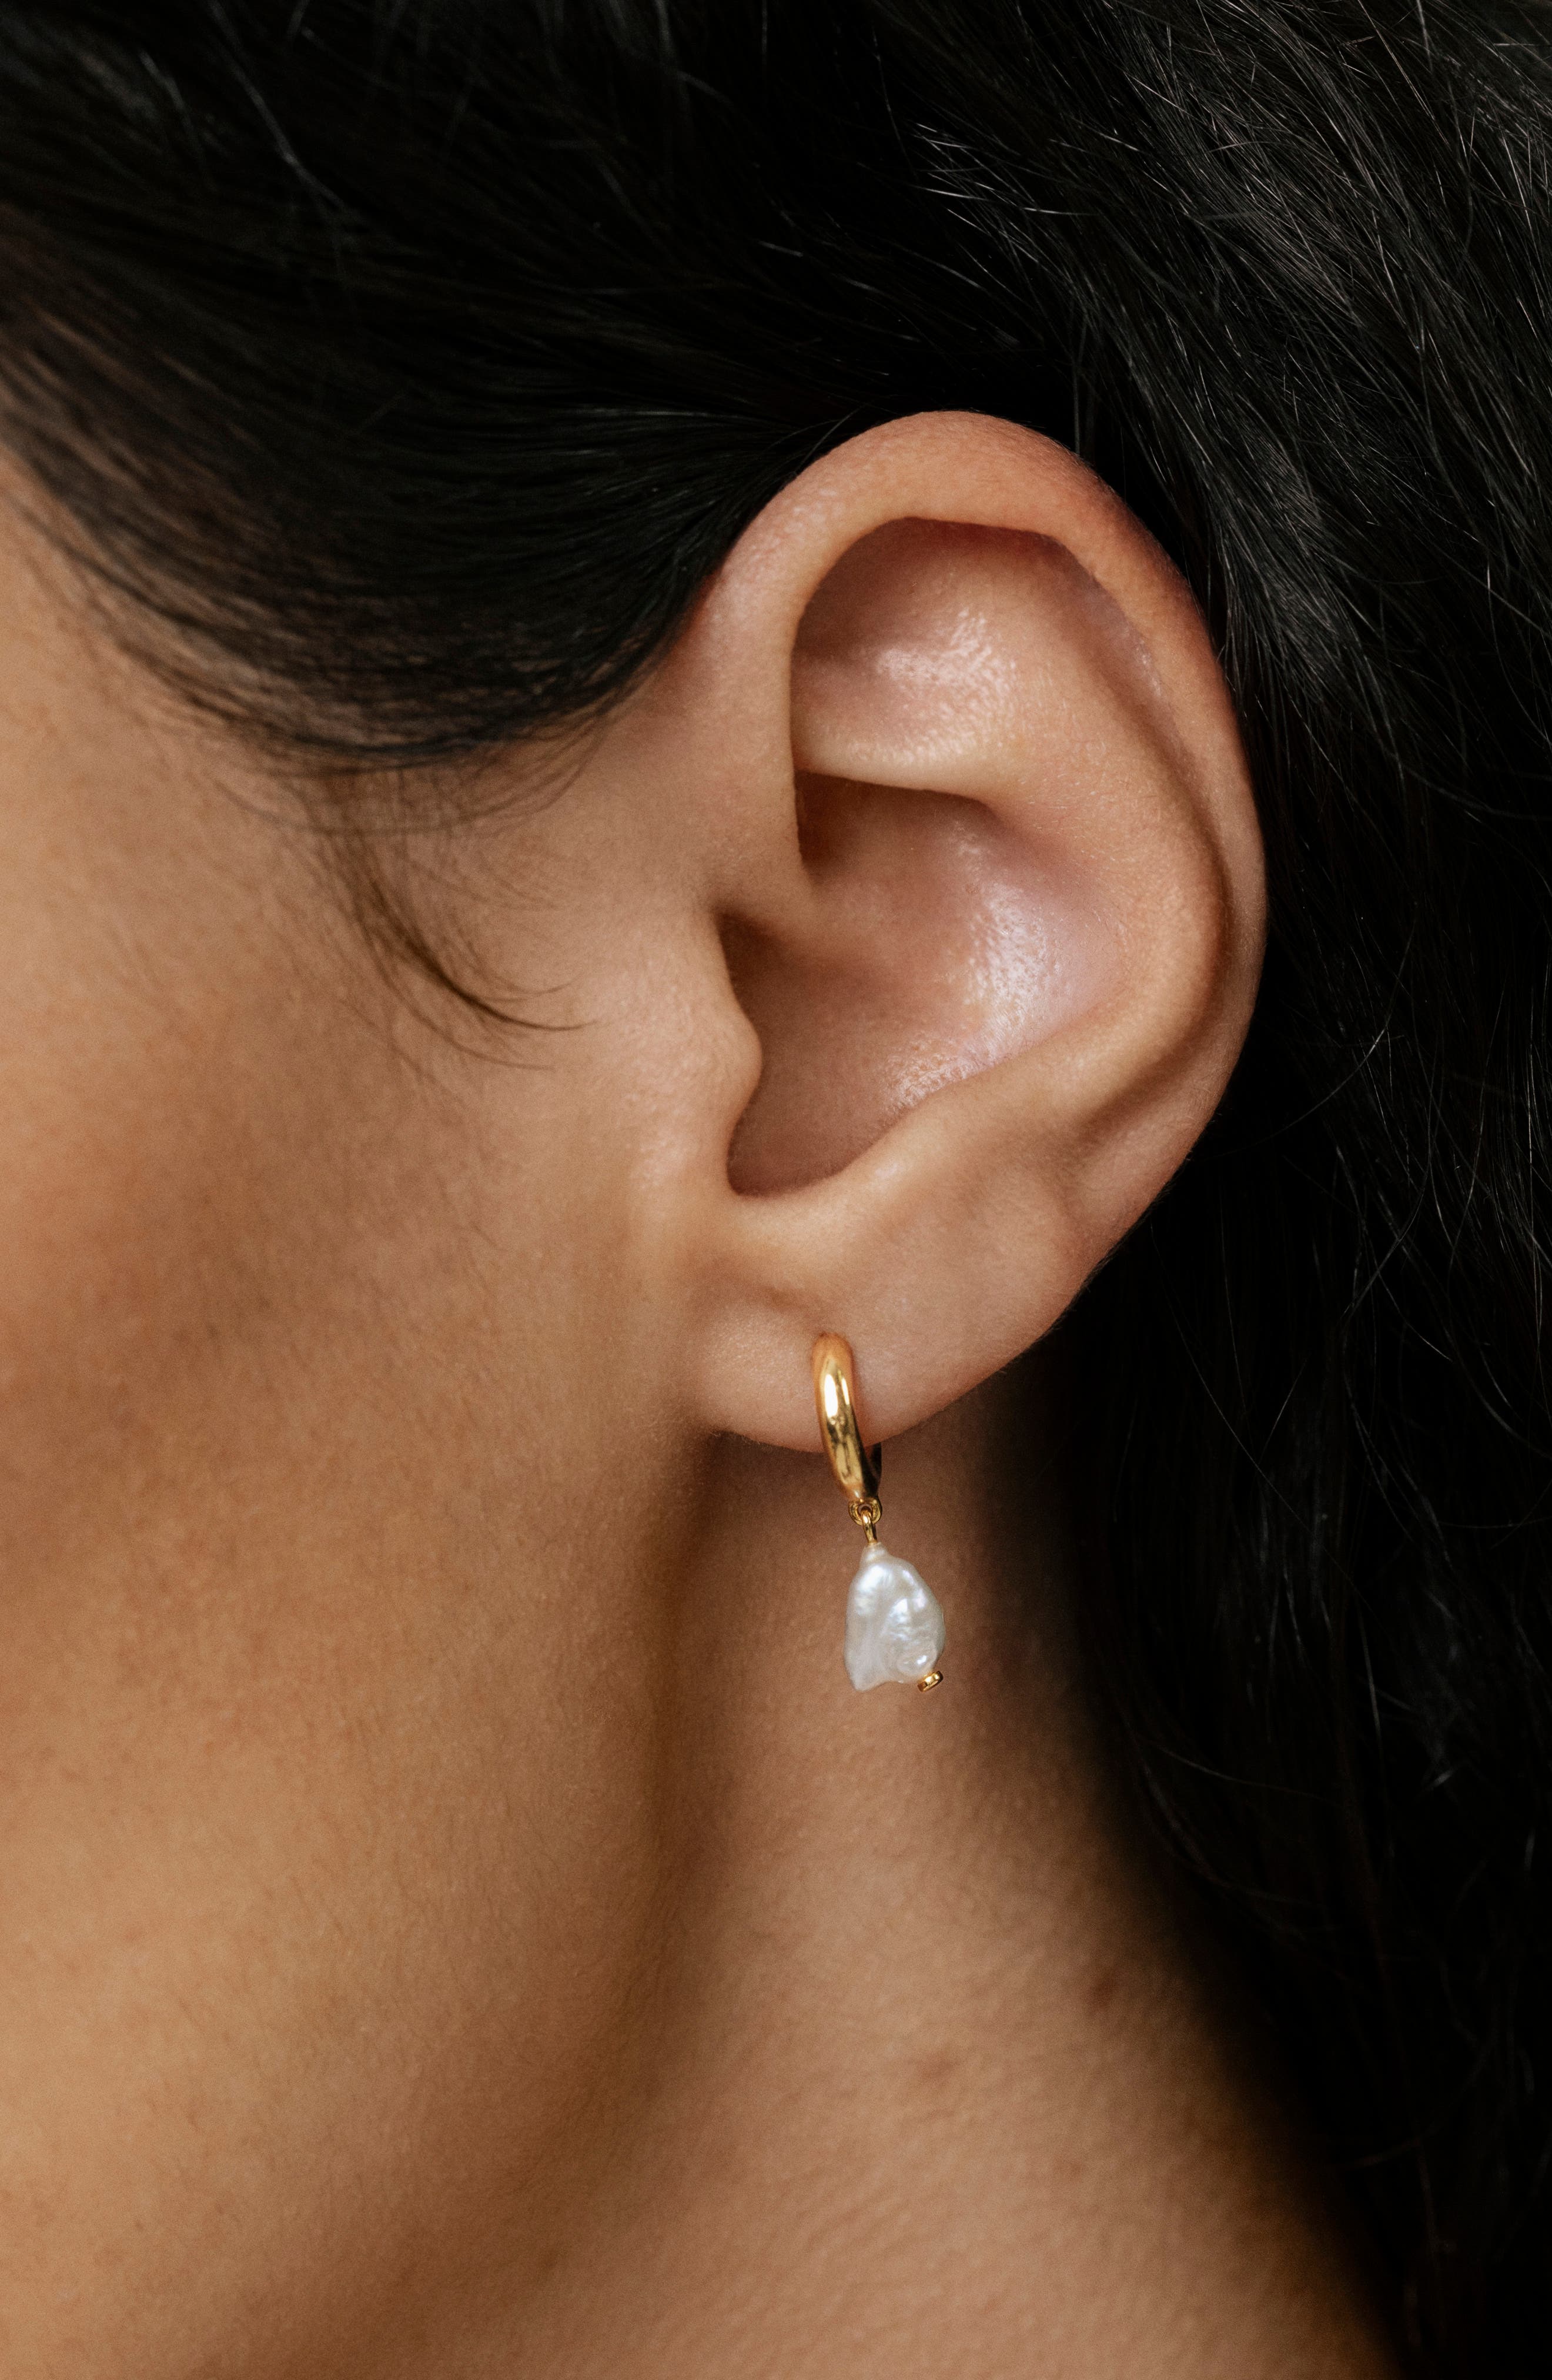 Dropship Chunky Gold Hoop Earrings For Women; Lightweight